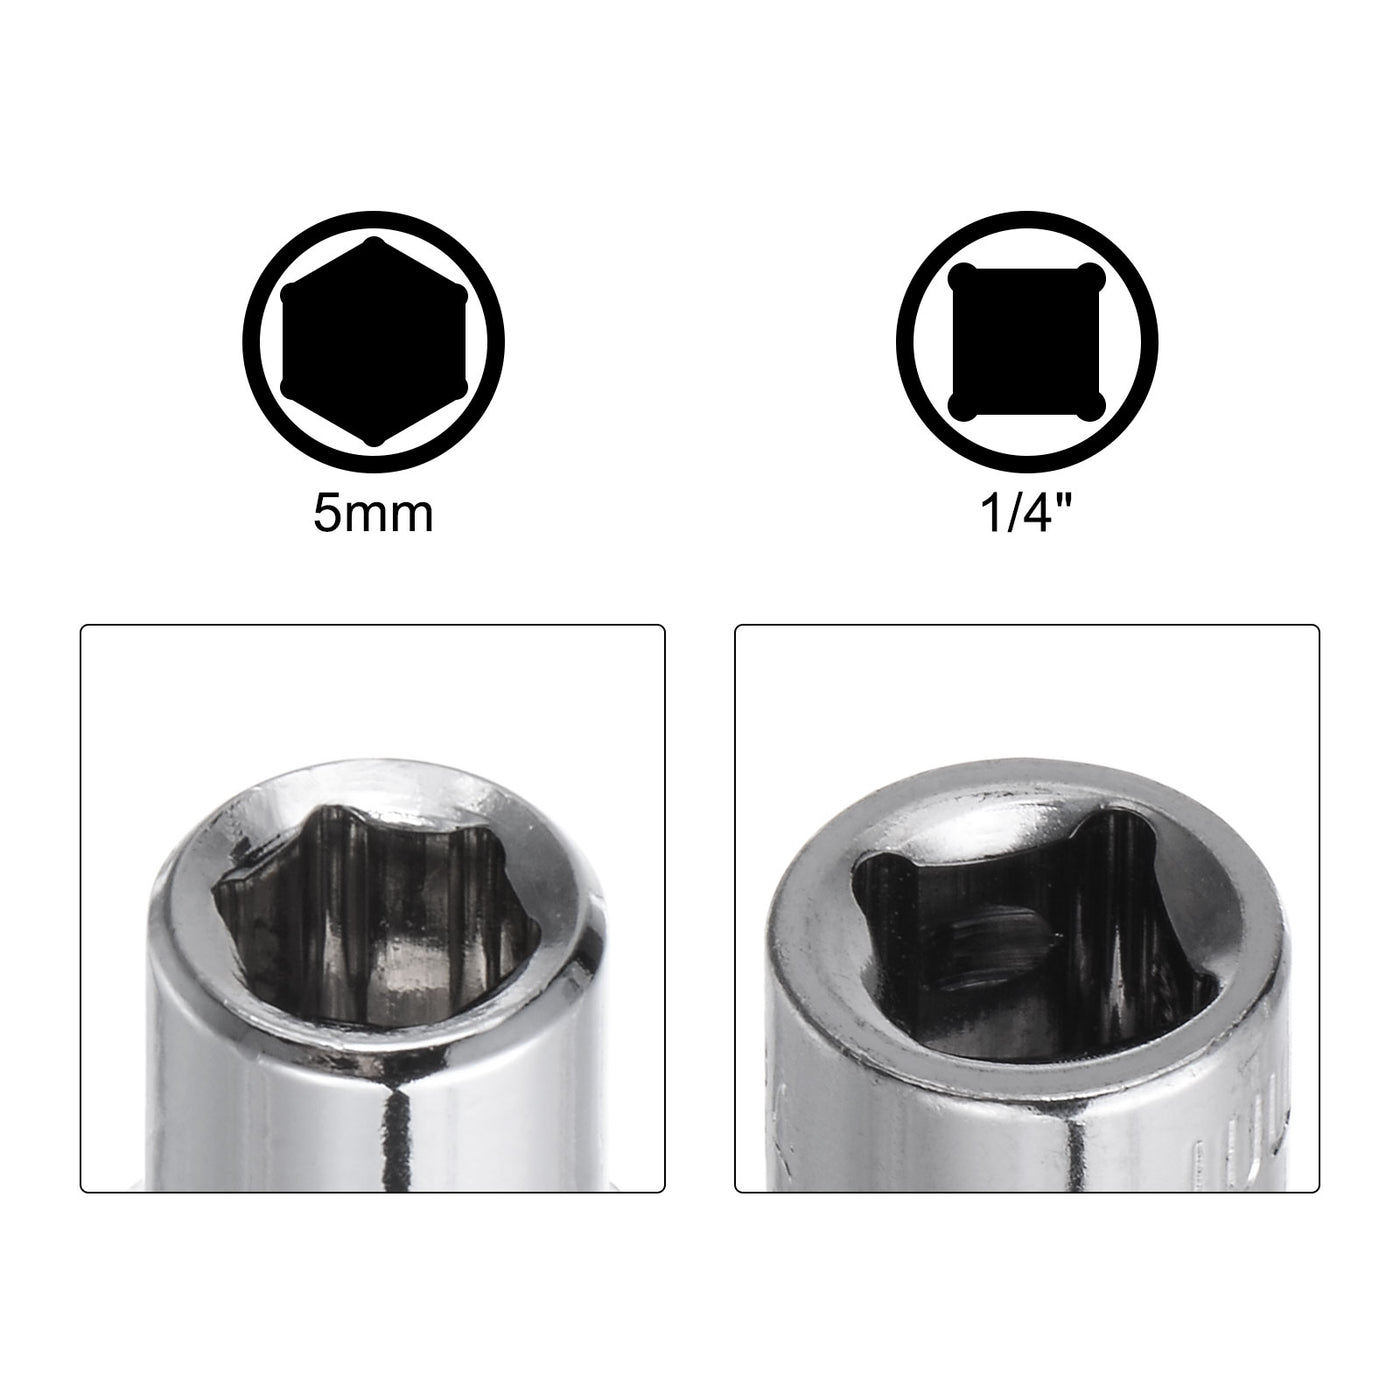 uxcell Uxcell 1/4" Drive 5mm Deep Socket Swivel Joints Hex Shank Impact Driver Adaptor Set